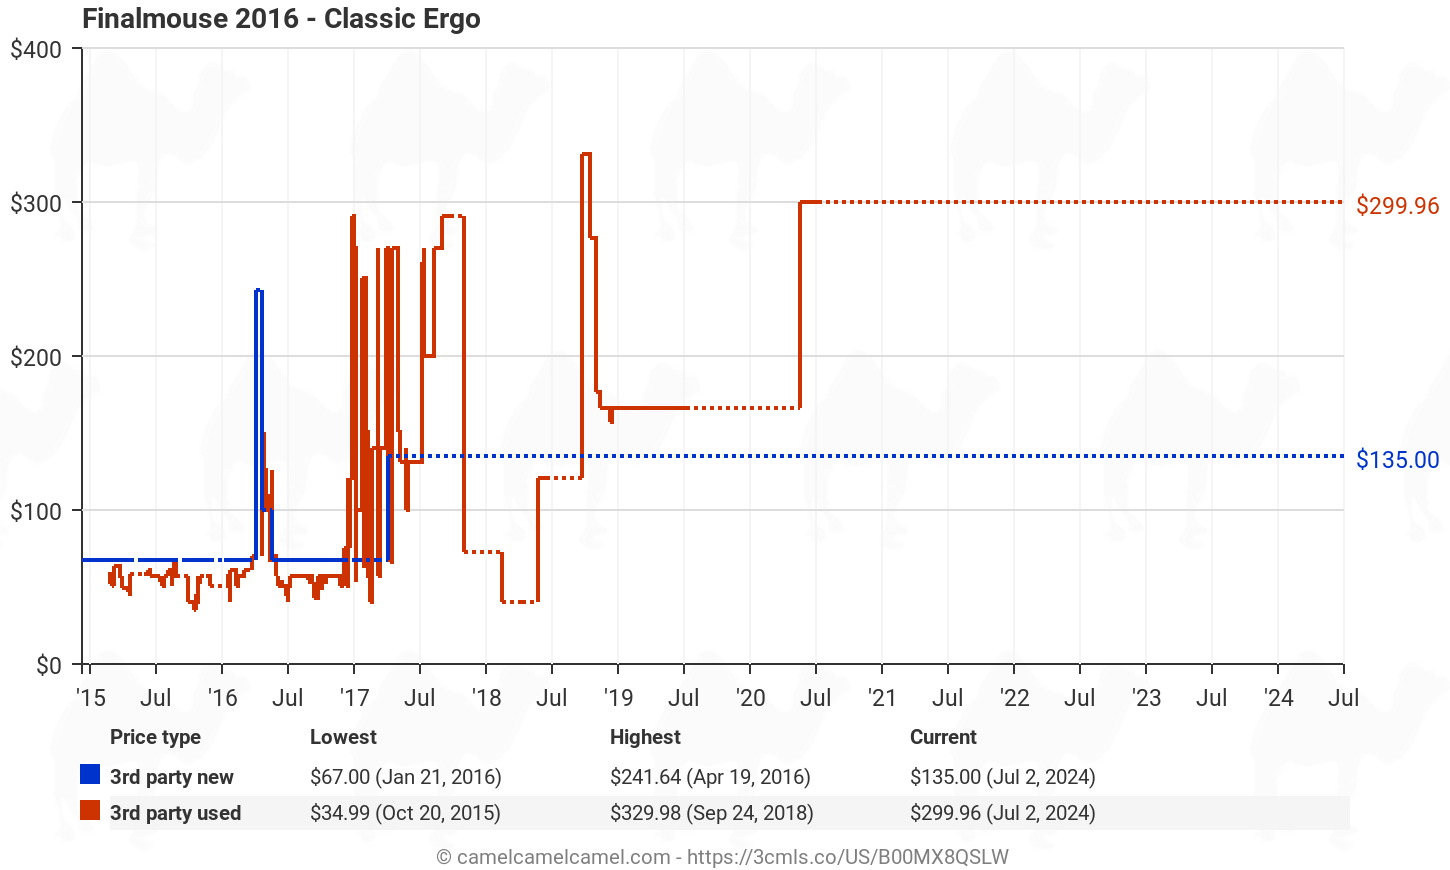 Finalmouse 16 Classic Ergo B00mx8qslw Amazon Price Tracker Tracking Amazon Price History Charts Amazon Price Watches Amazon Price Drop Alerts Camelcamelcamel Com